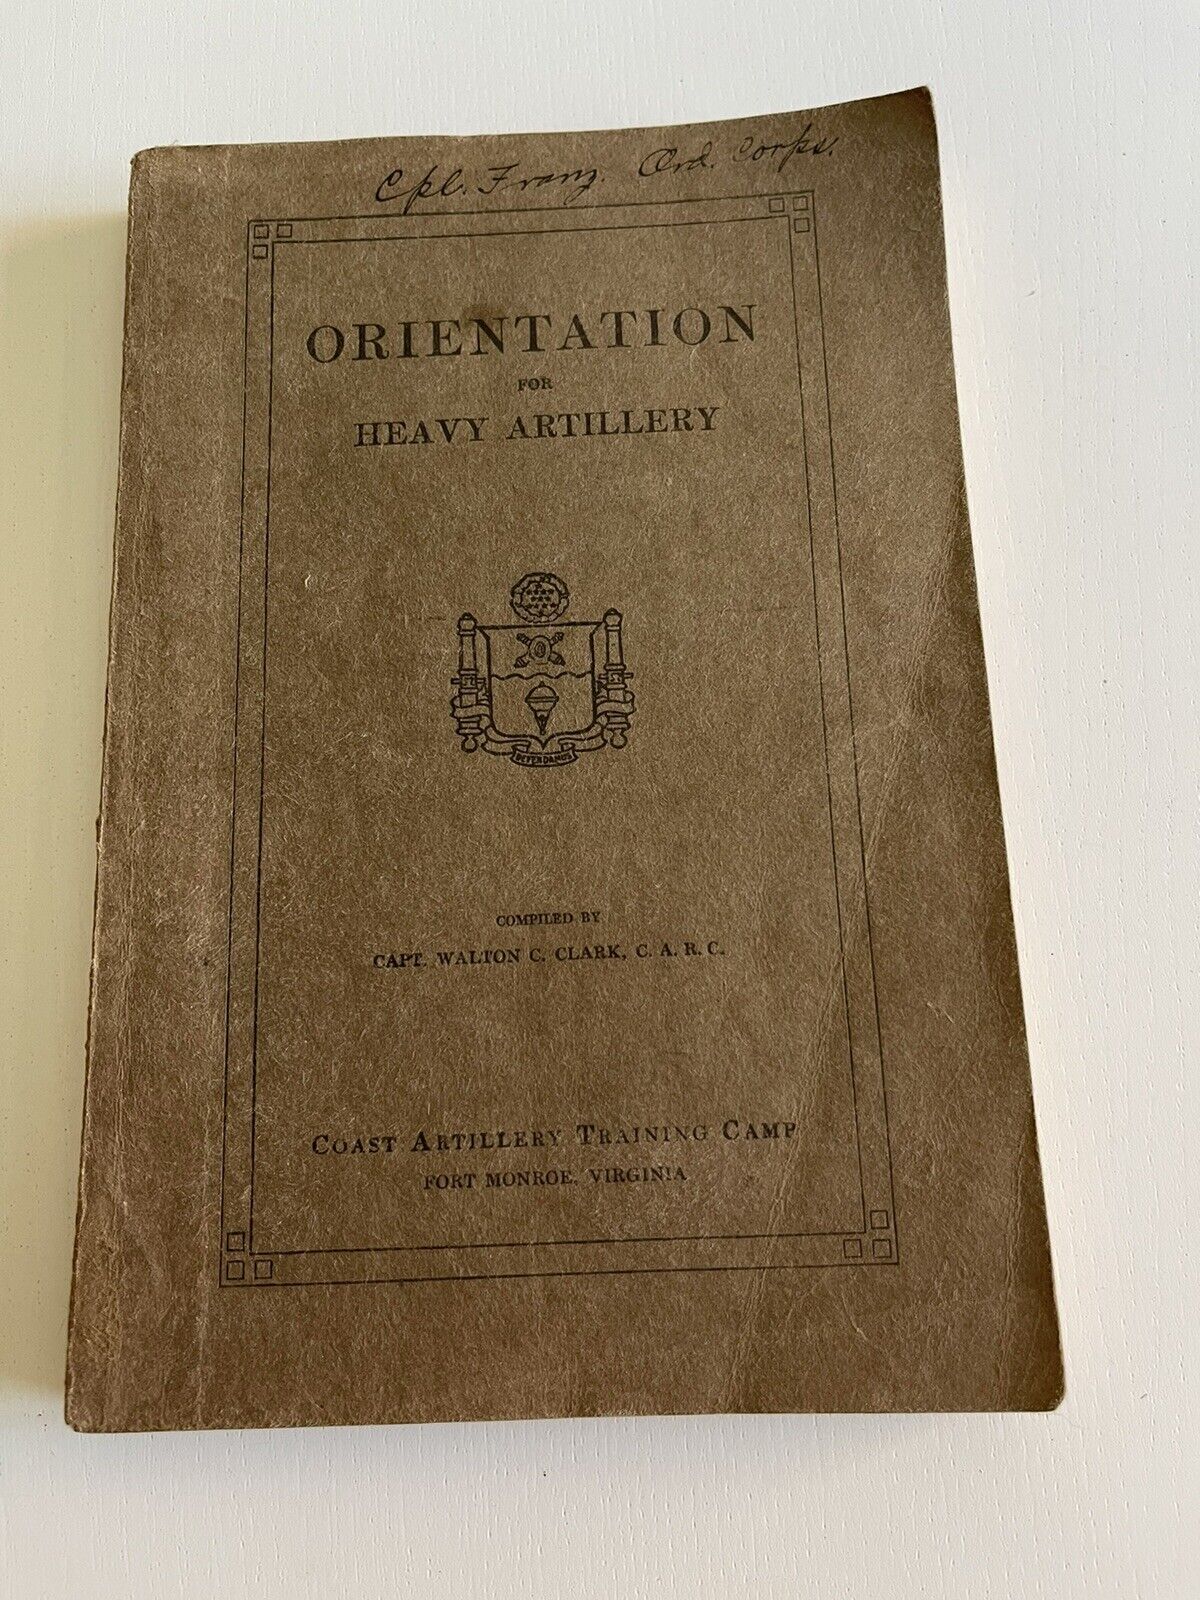 Orientation for Heavy Artillery by Capt Walton C. Clark Book Guide 1918